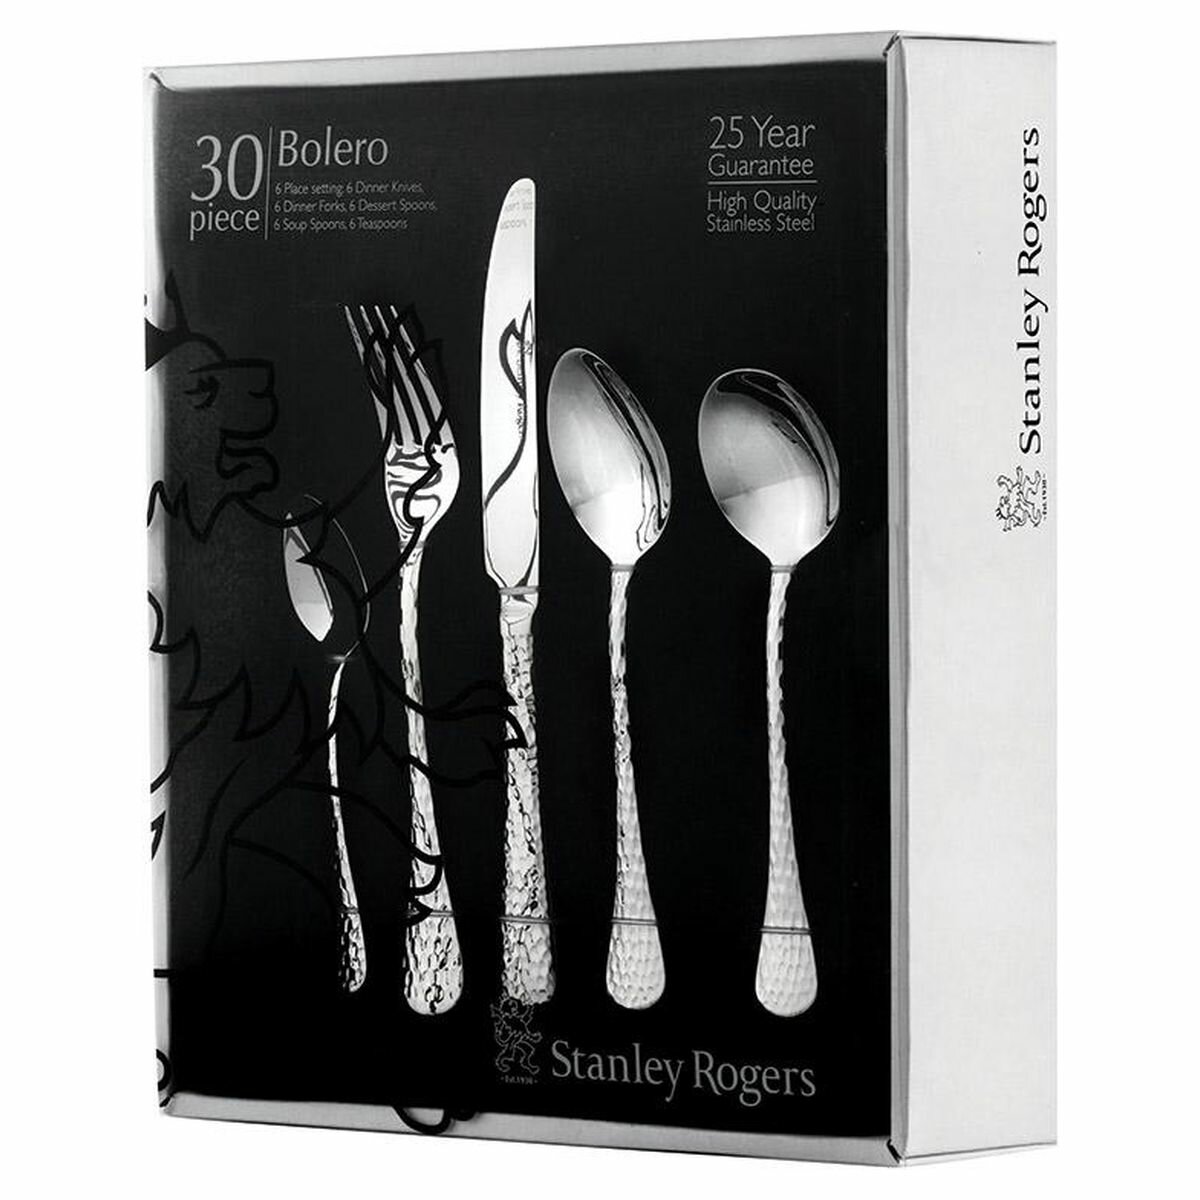 appliancesonline.com.au | Stanley Rogers Bolero 30 Piece Cutlery Set 50794